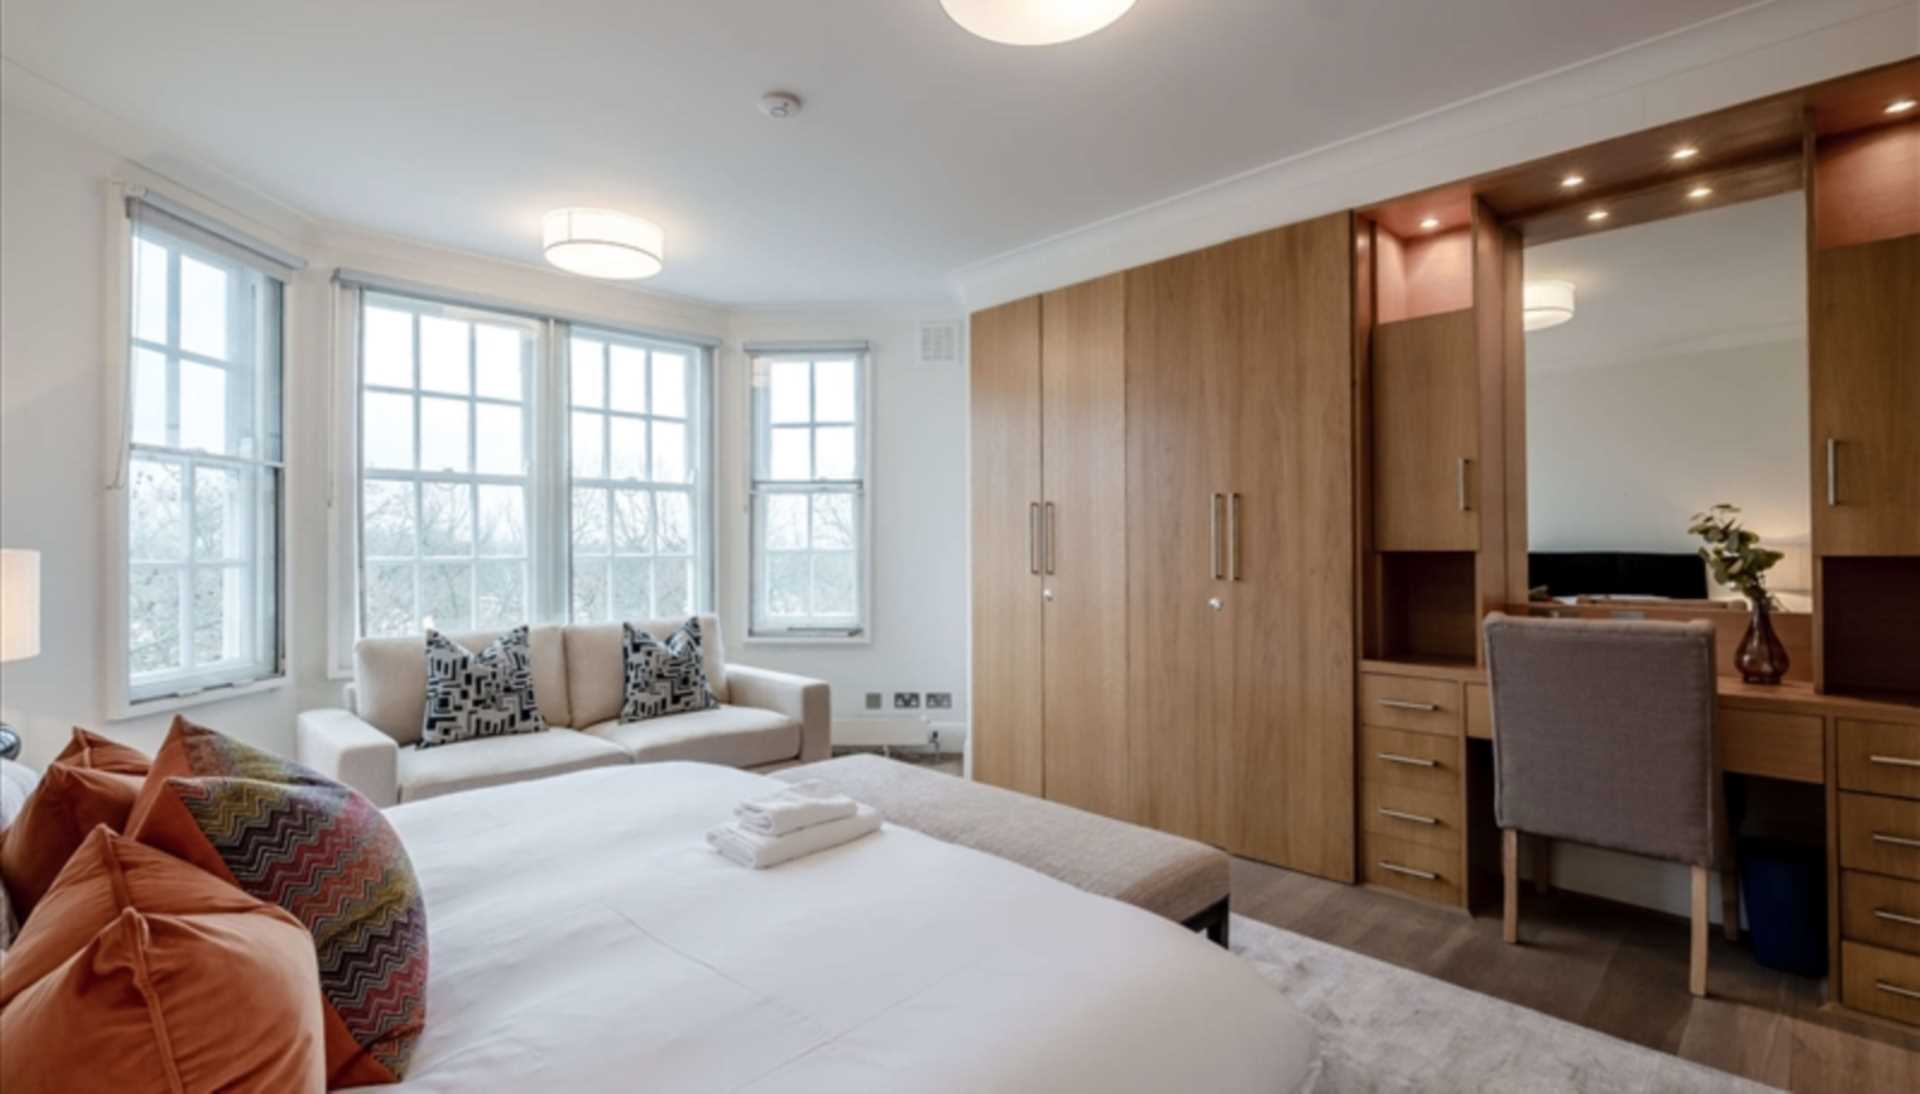 London NW8 7HY 4 bed flat rental property internal/external image-8